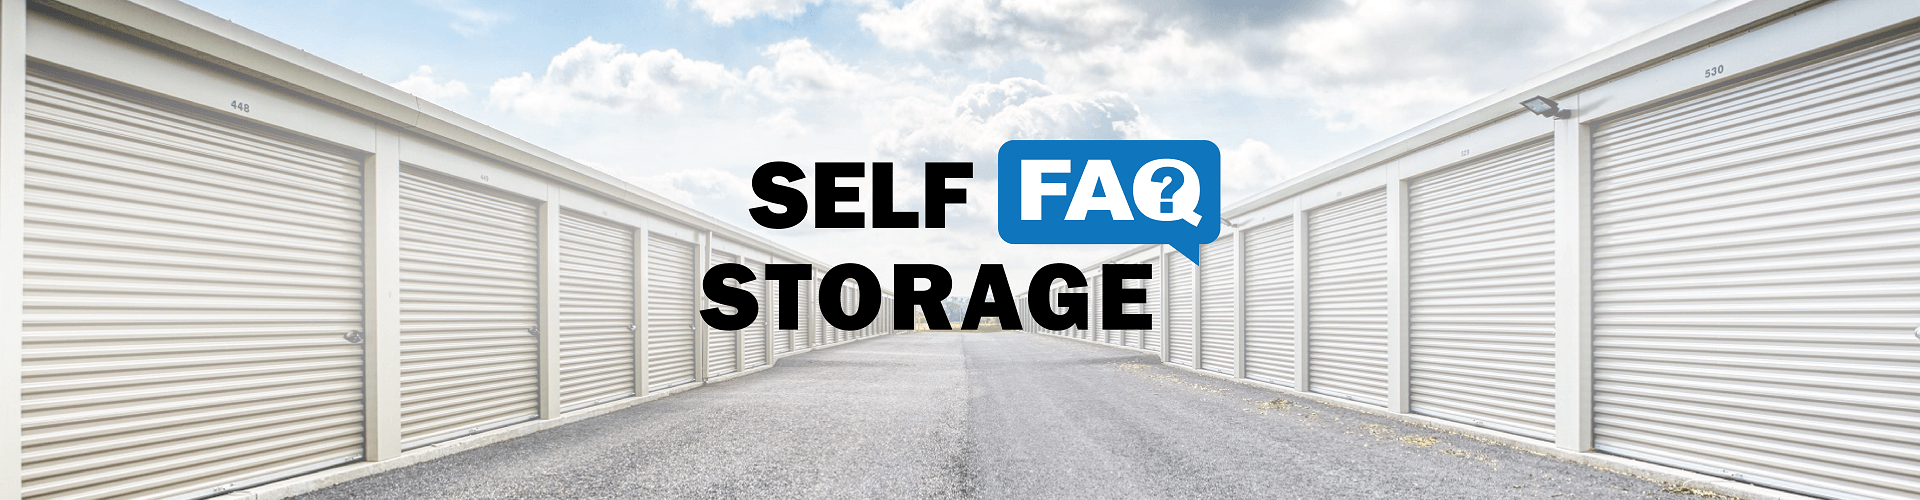 ProSafe Storage - Self Storage FAQ